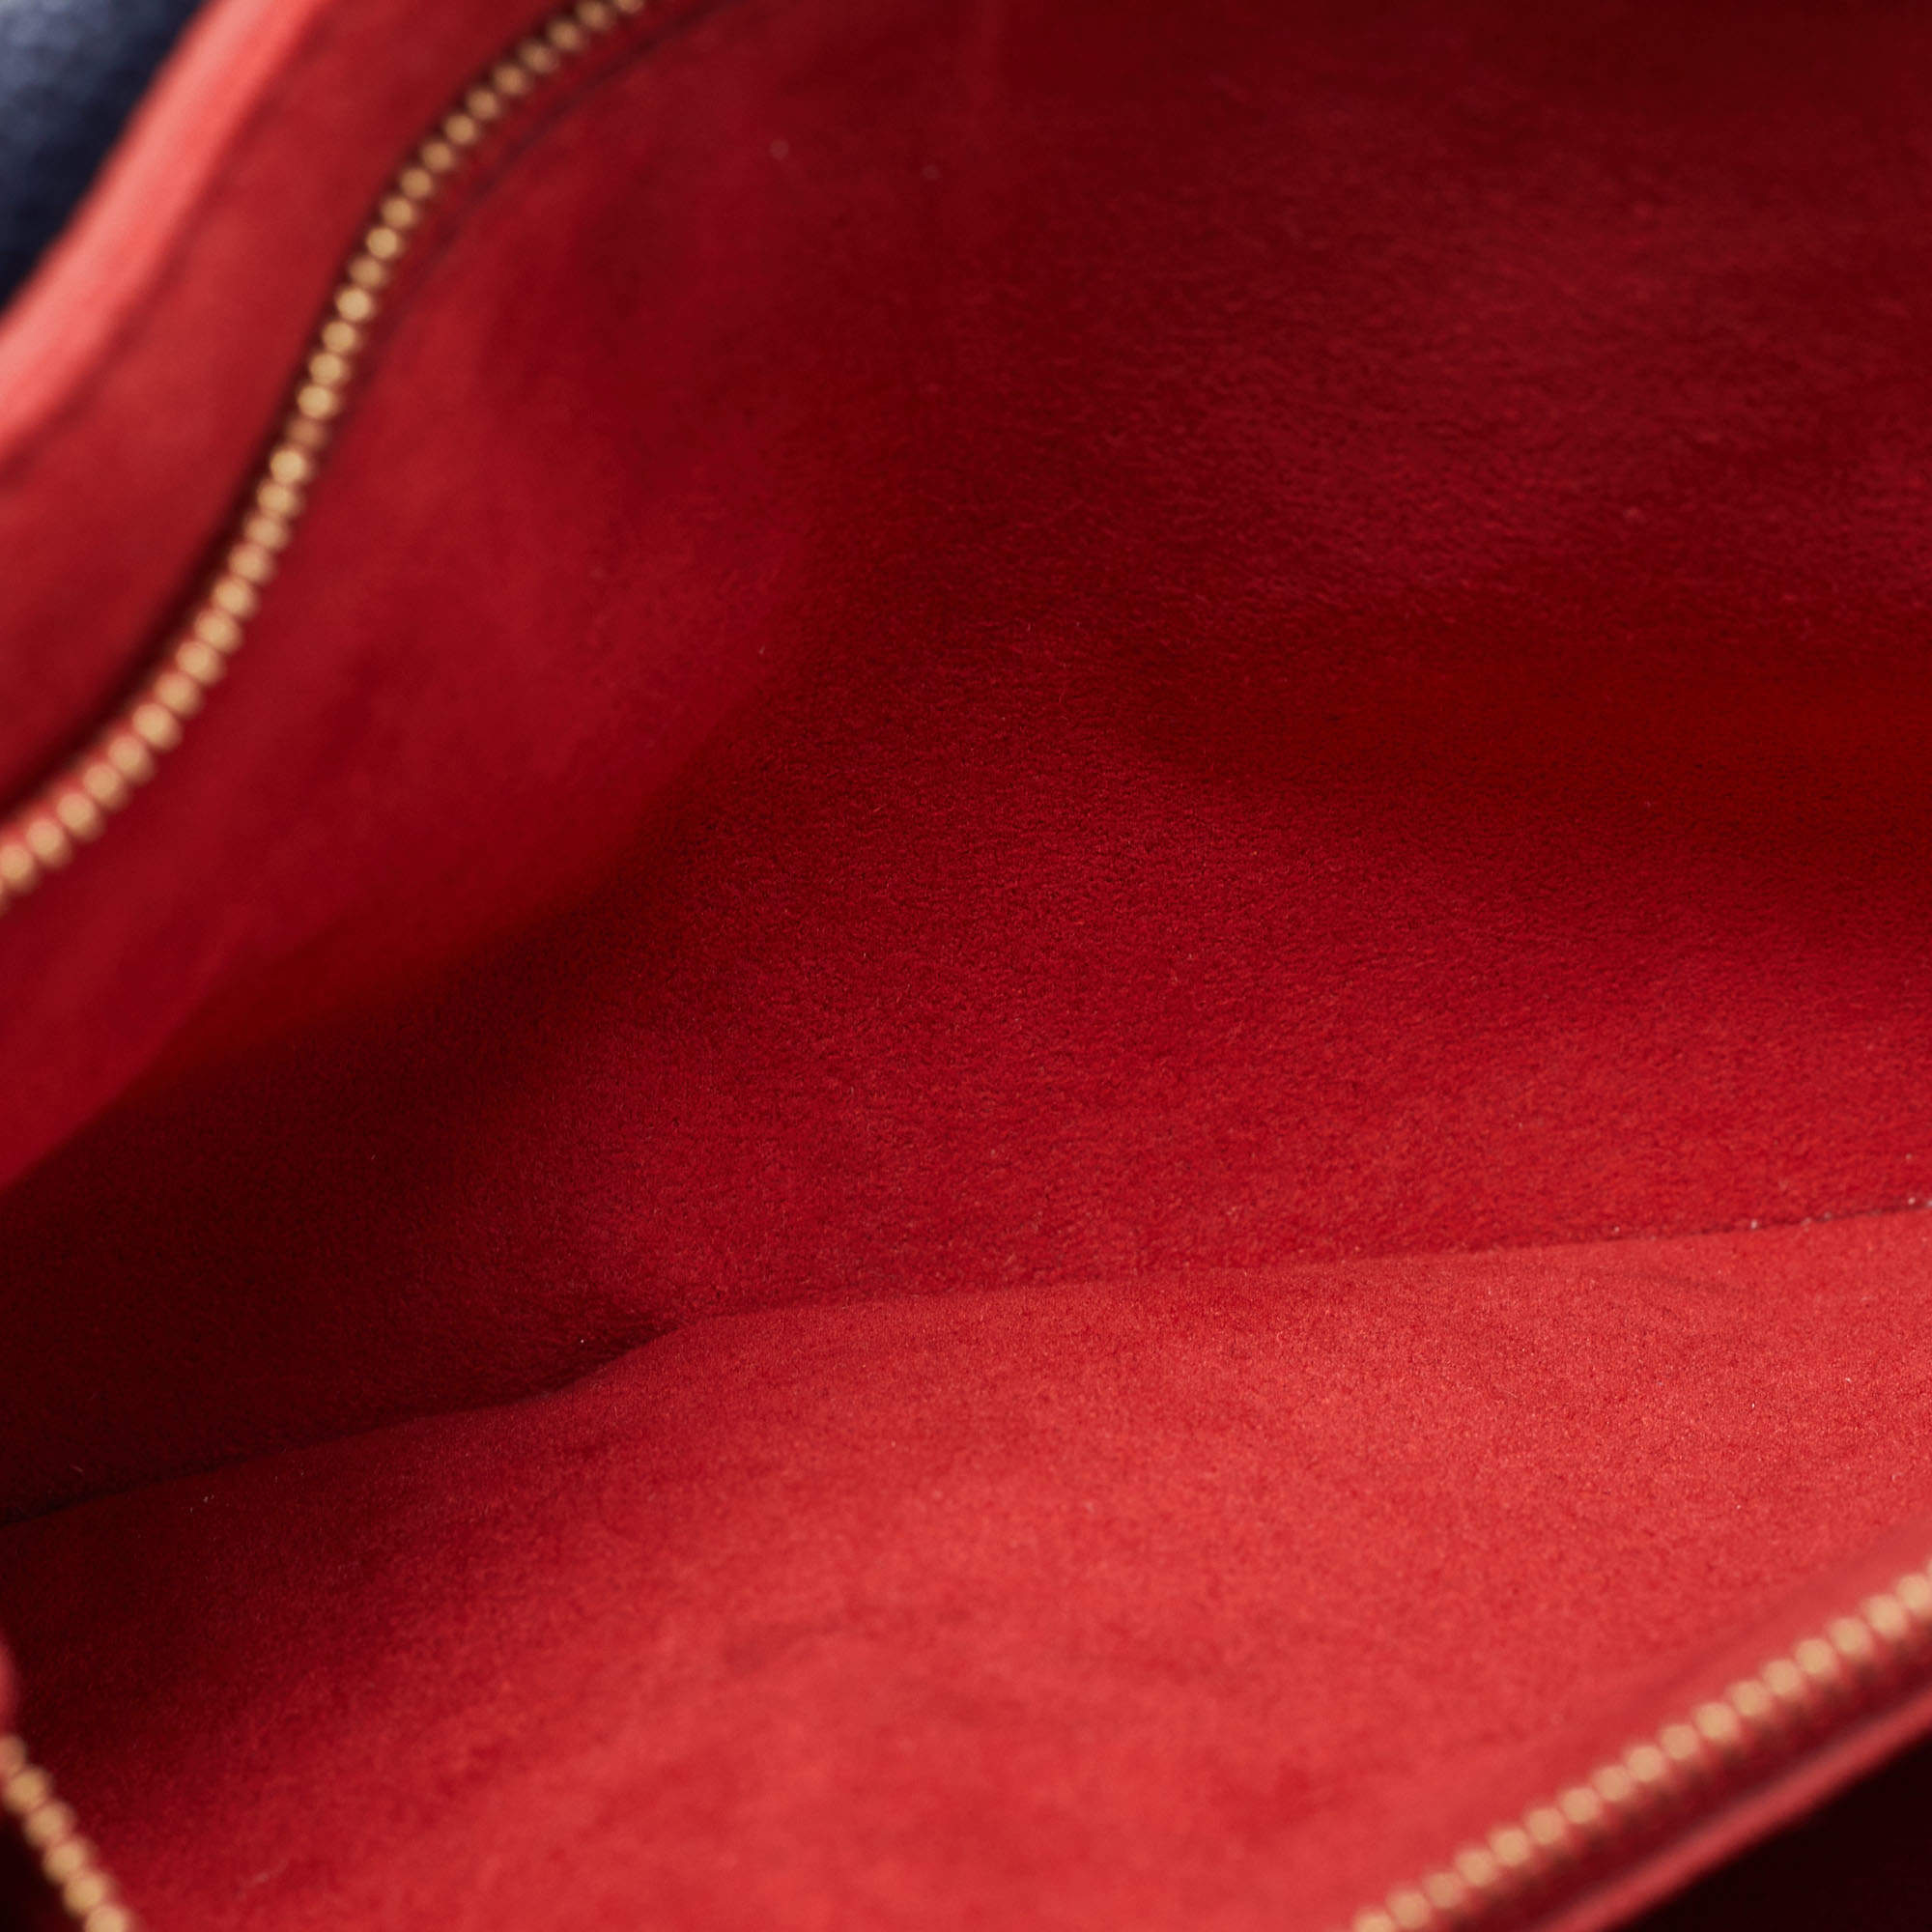 Louis Vuitton Vavin Pm Shoulder Bag M52271 Amplant Marine Rouge Gold  Hardware Is